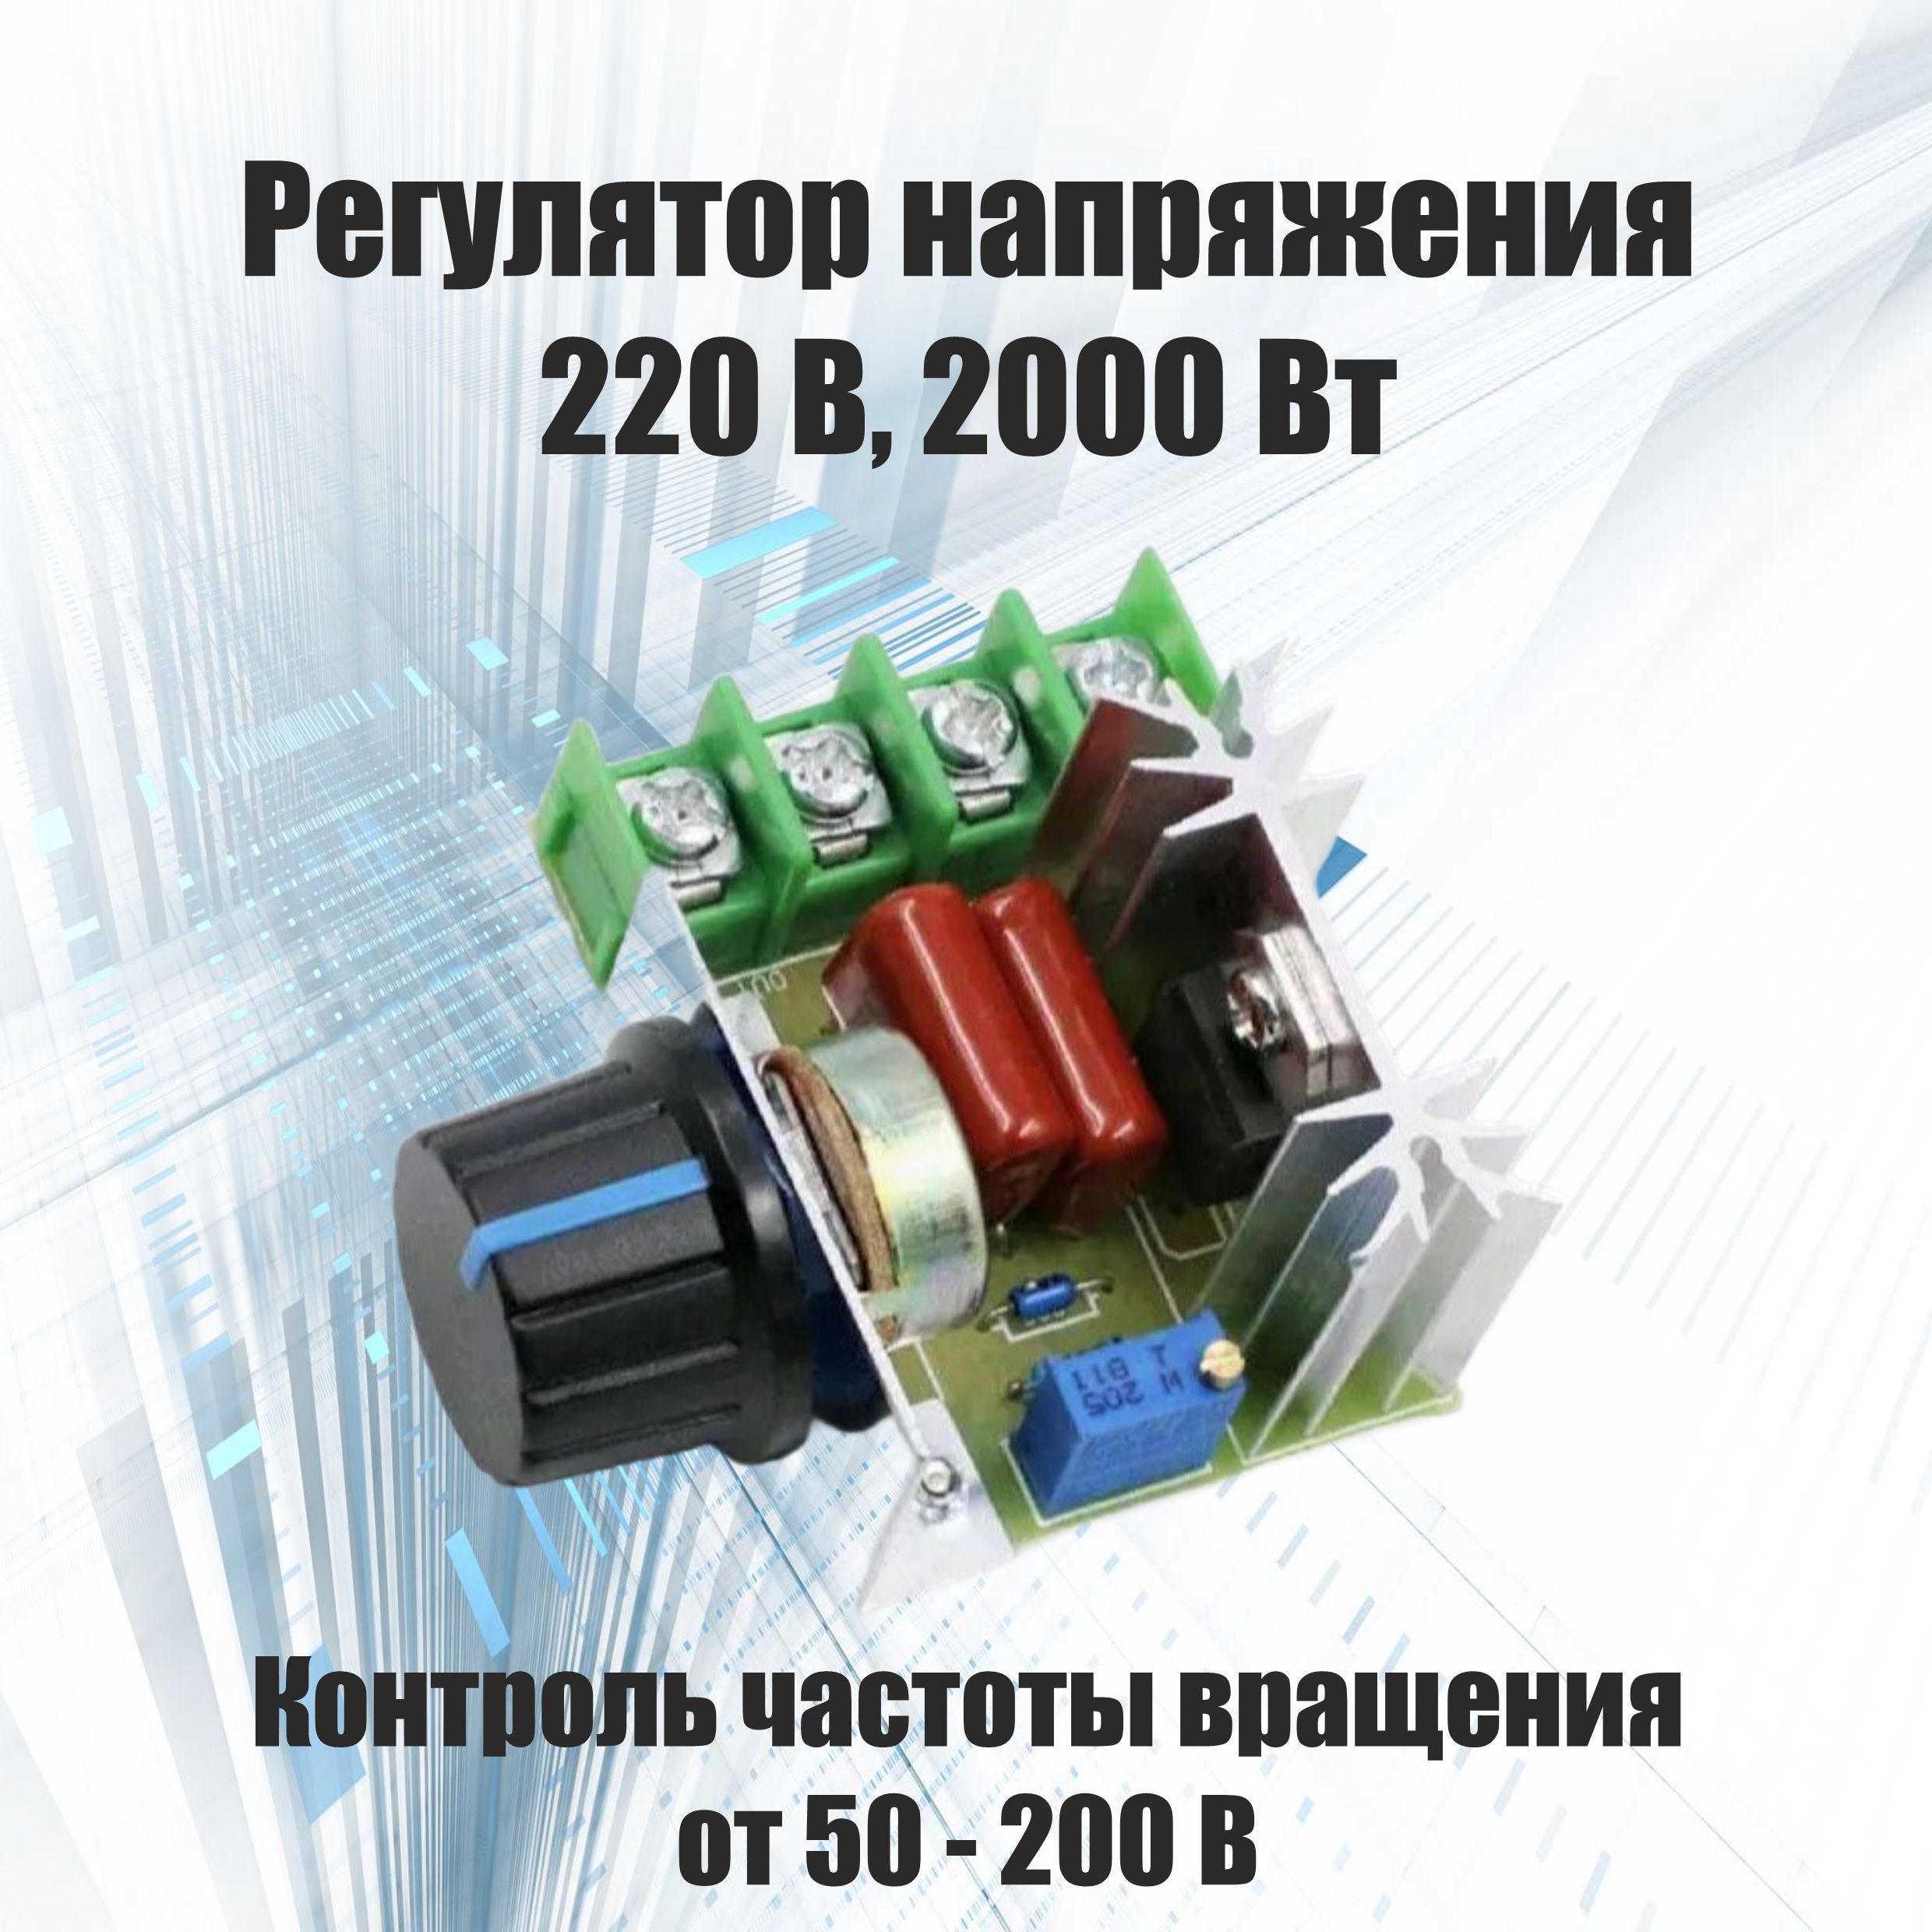 Симисторный регулятор мощности BTA-16 AC 220V 2000W AC 220V 2000W